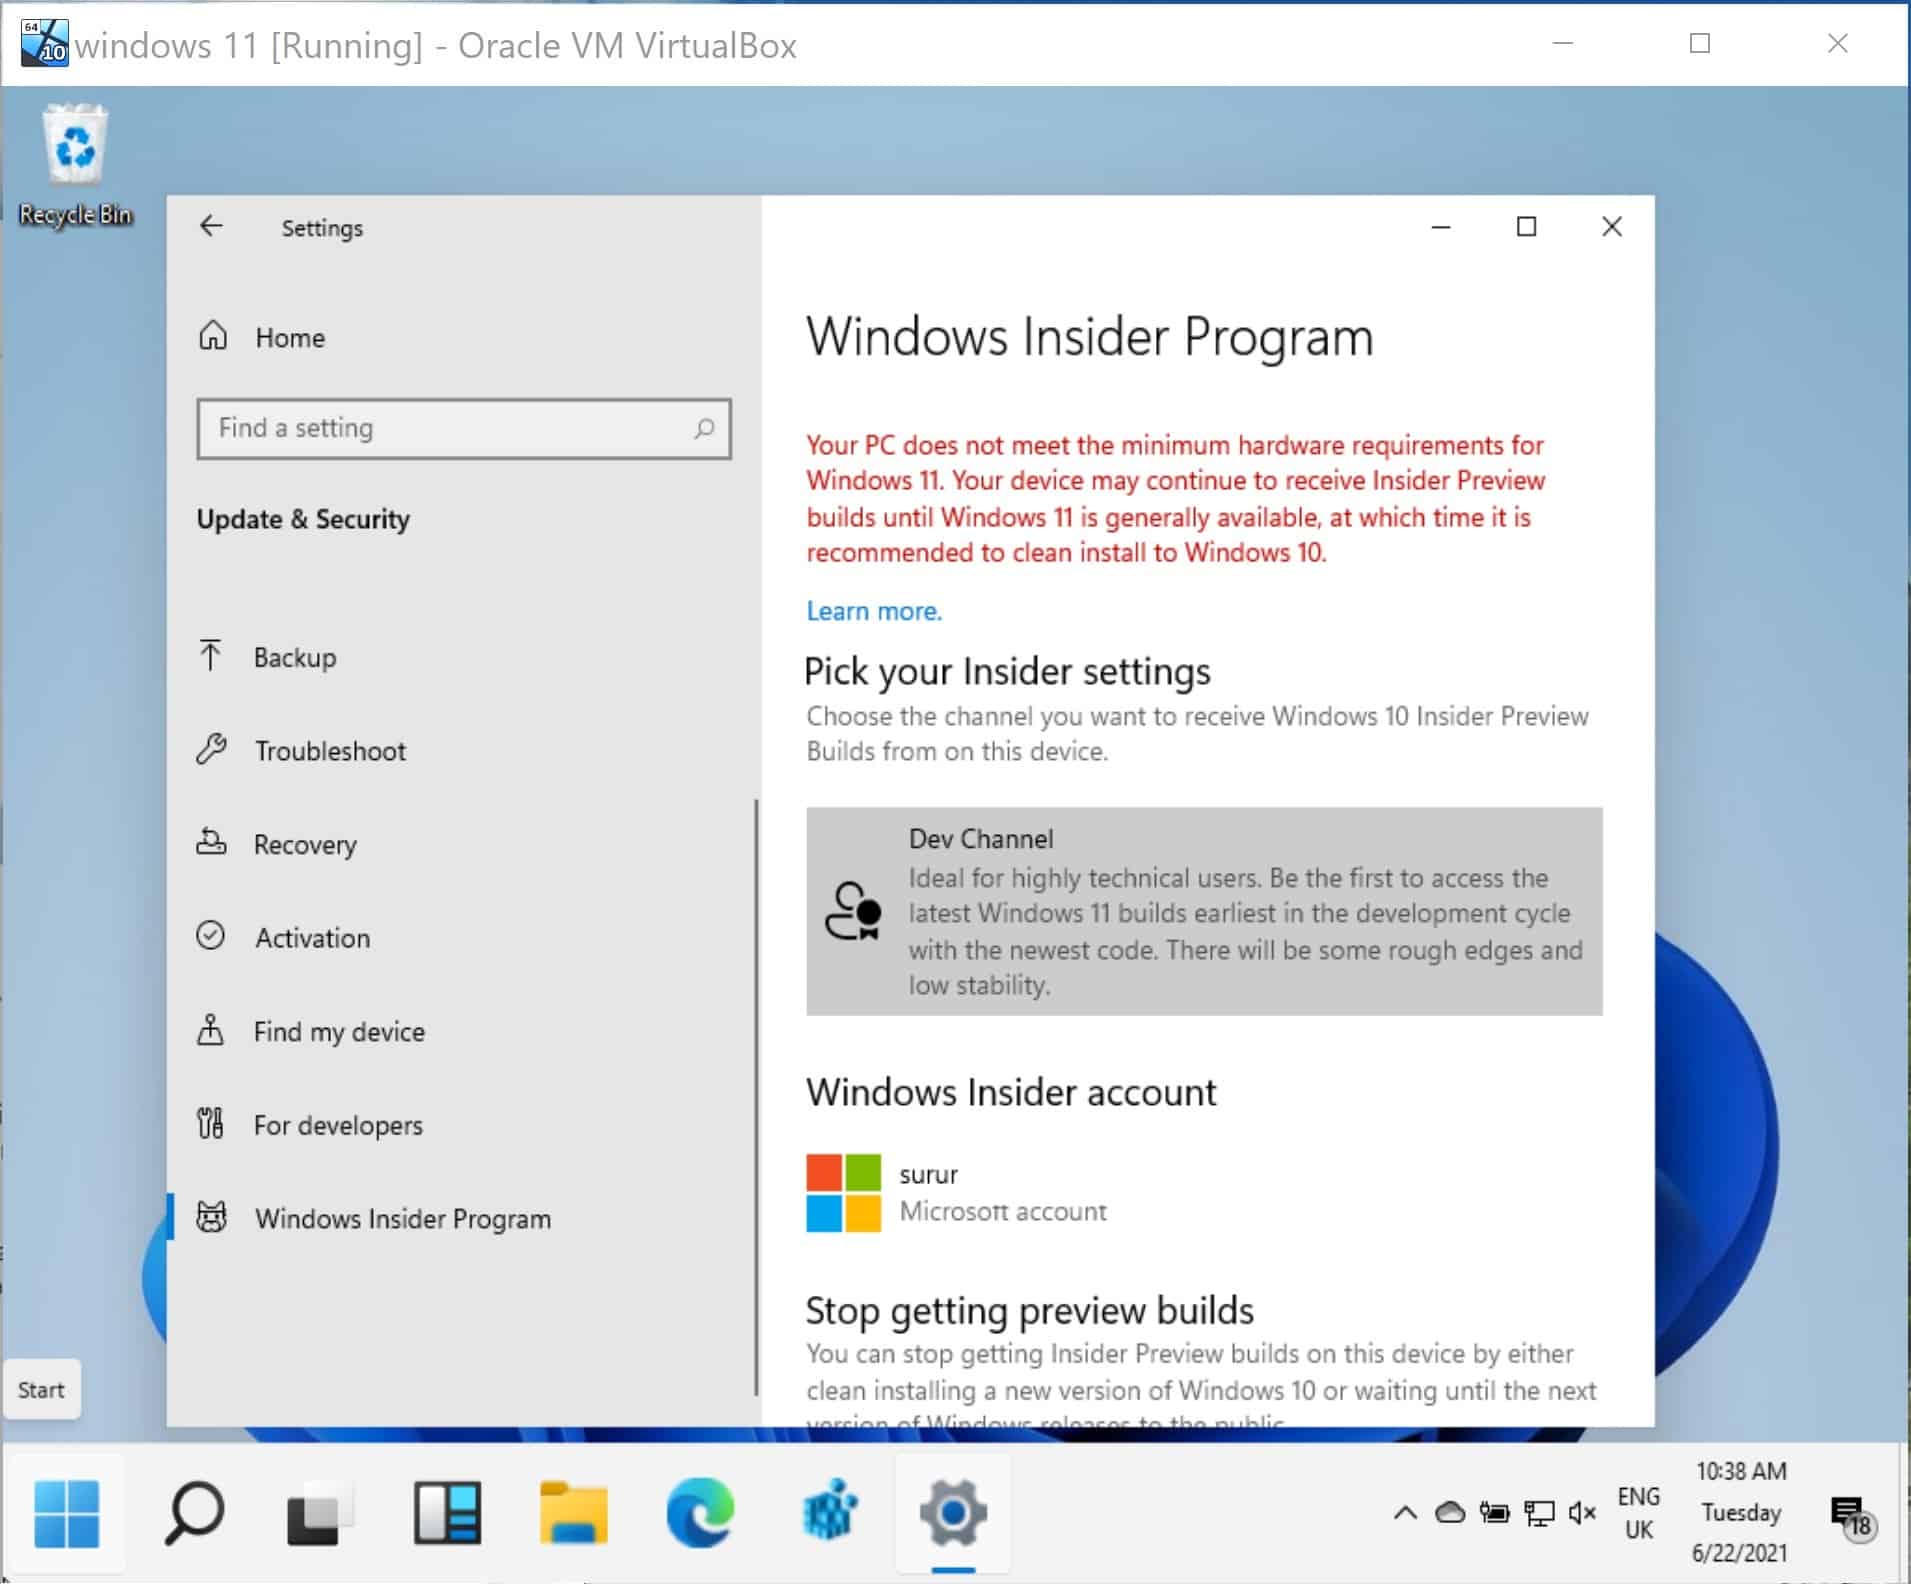 The Windows Insider Program